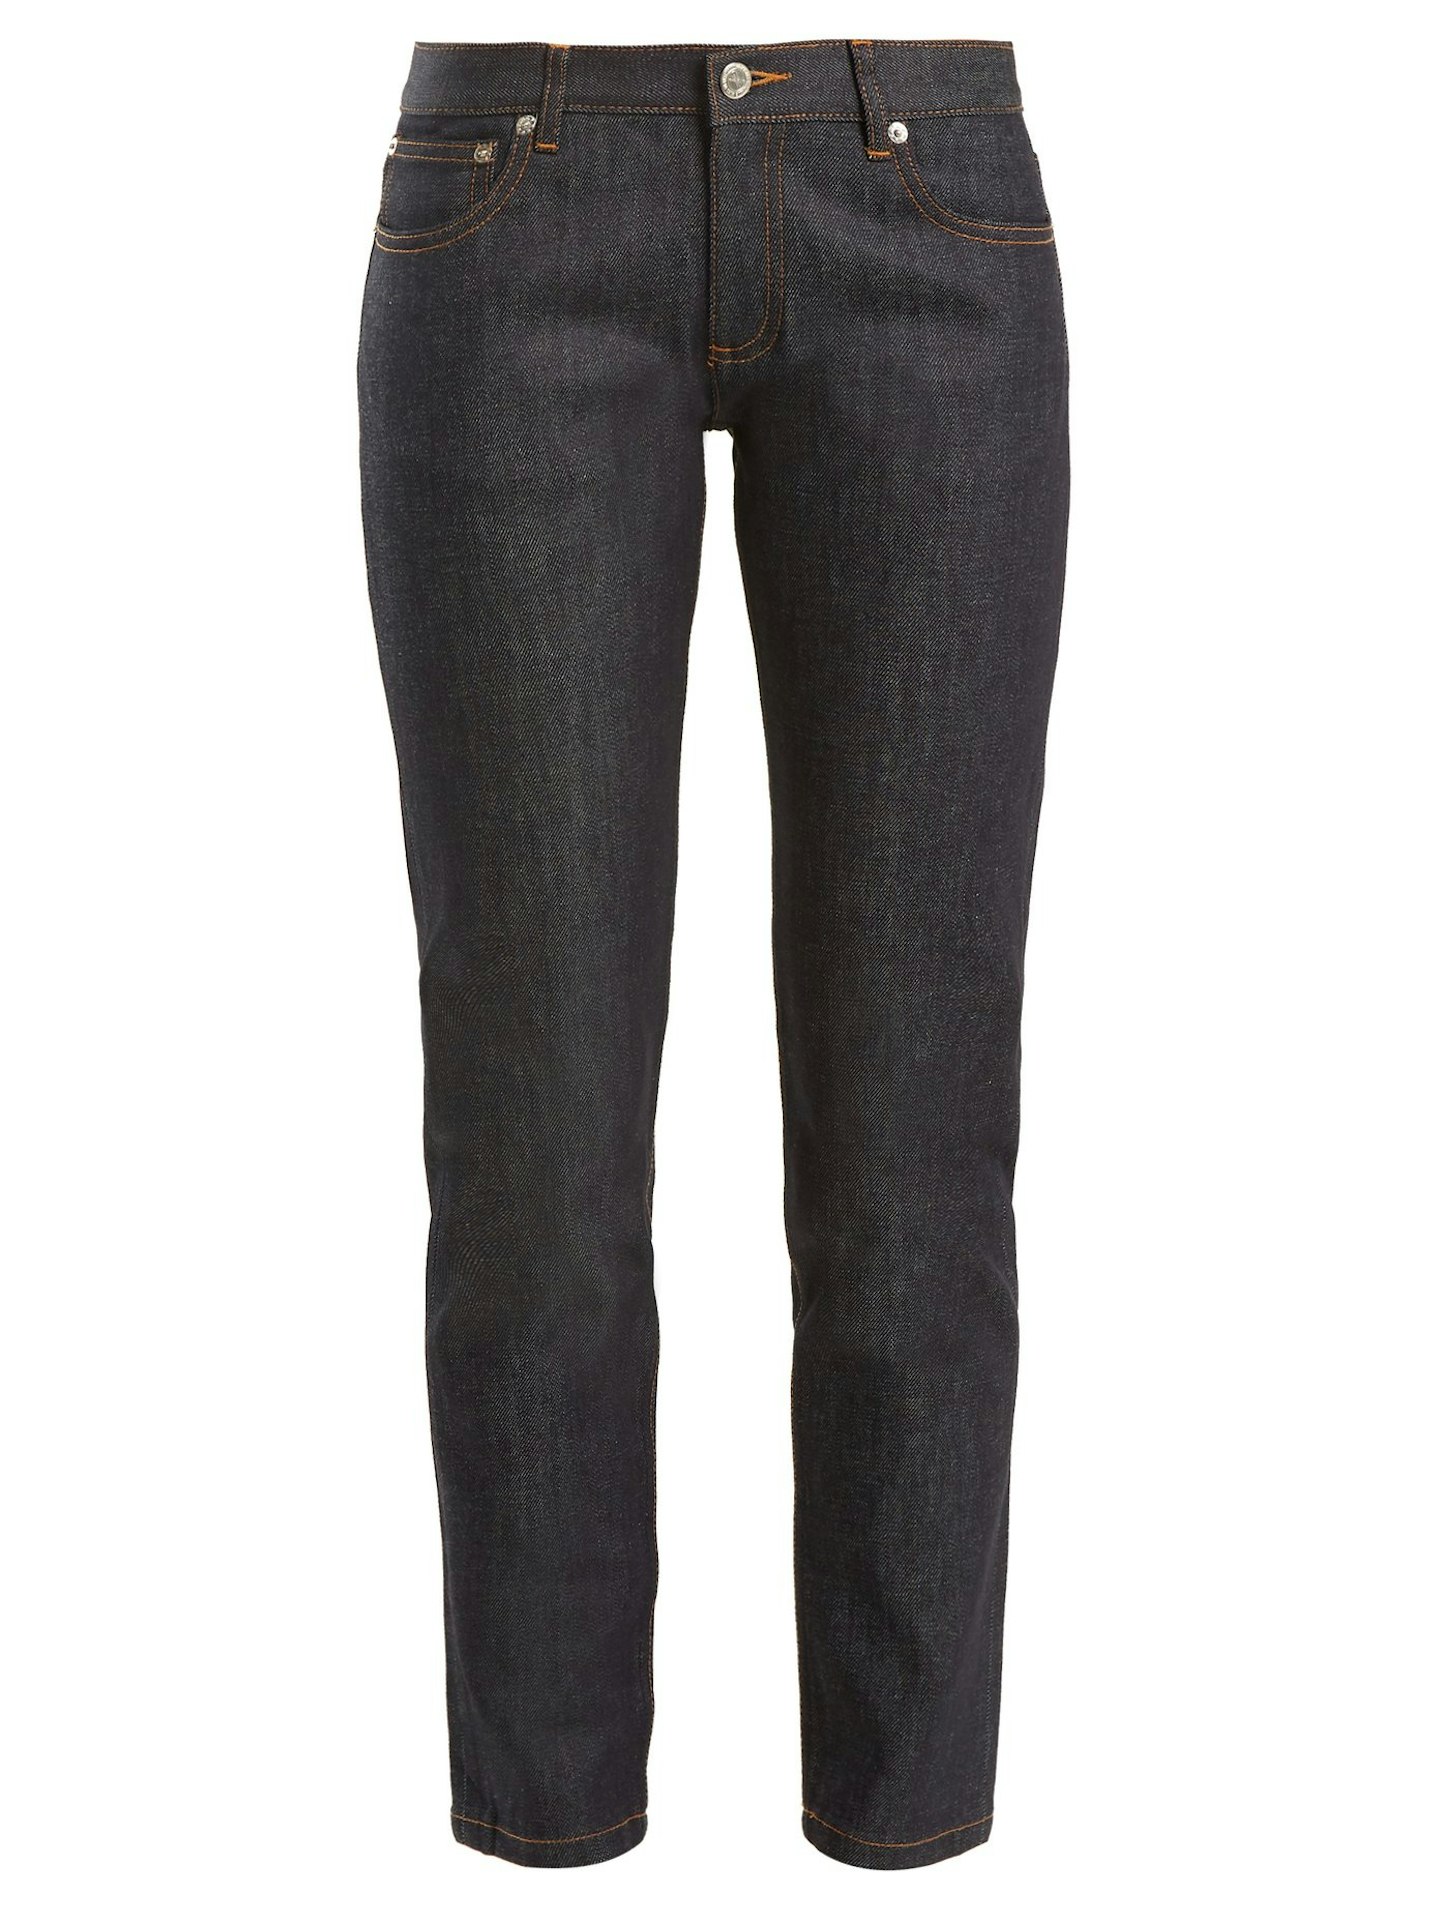 APC, Etroit Mid-Rise Slim-Leg Cropped Jeans, £130, Matchesfashion.com